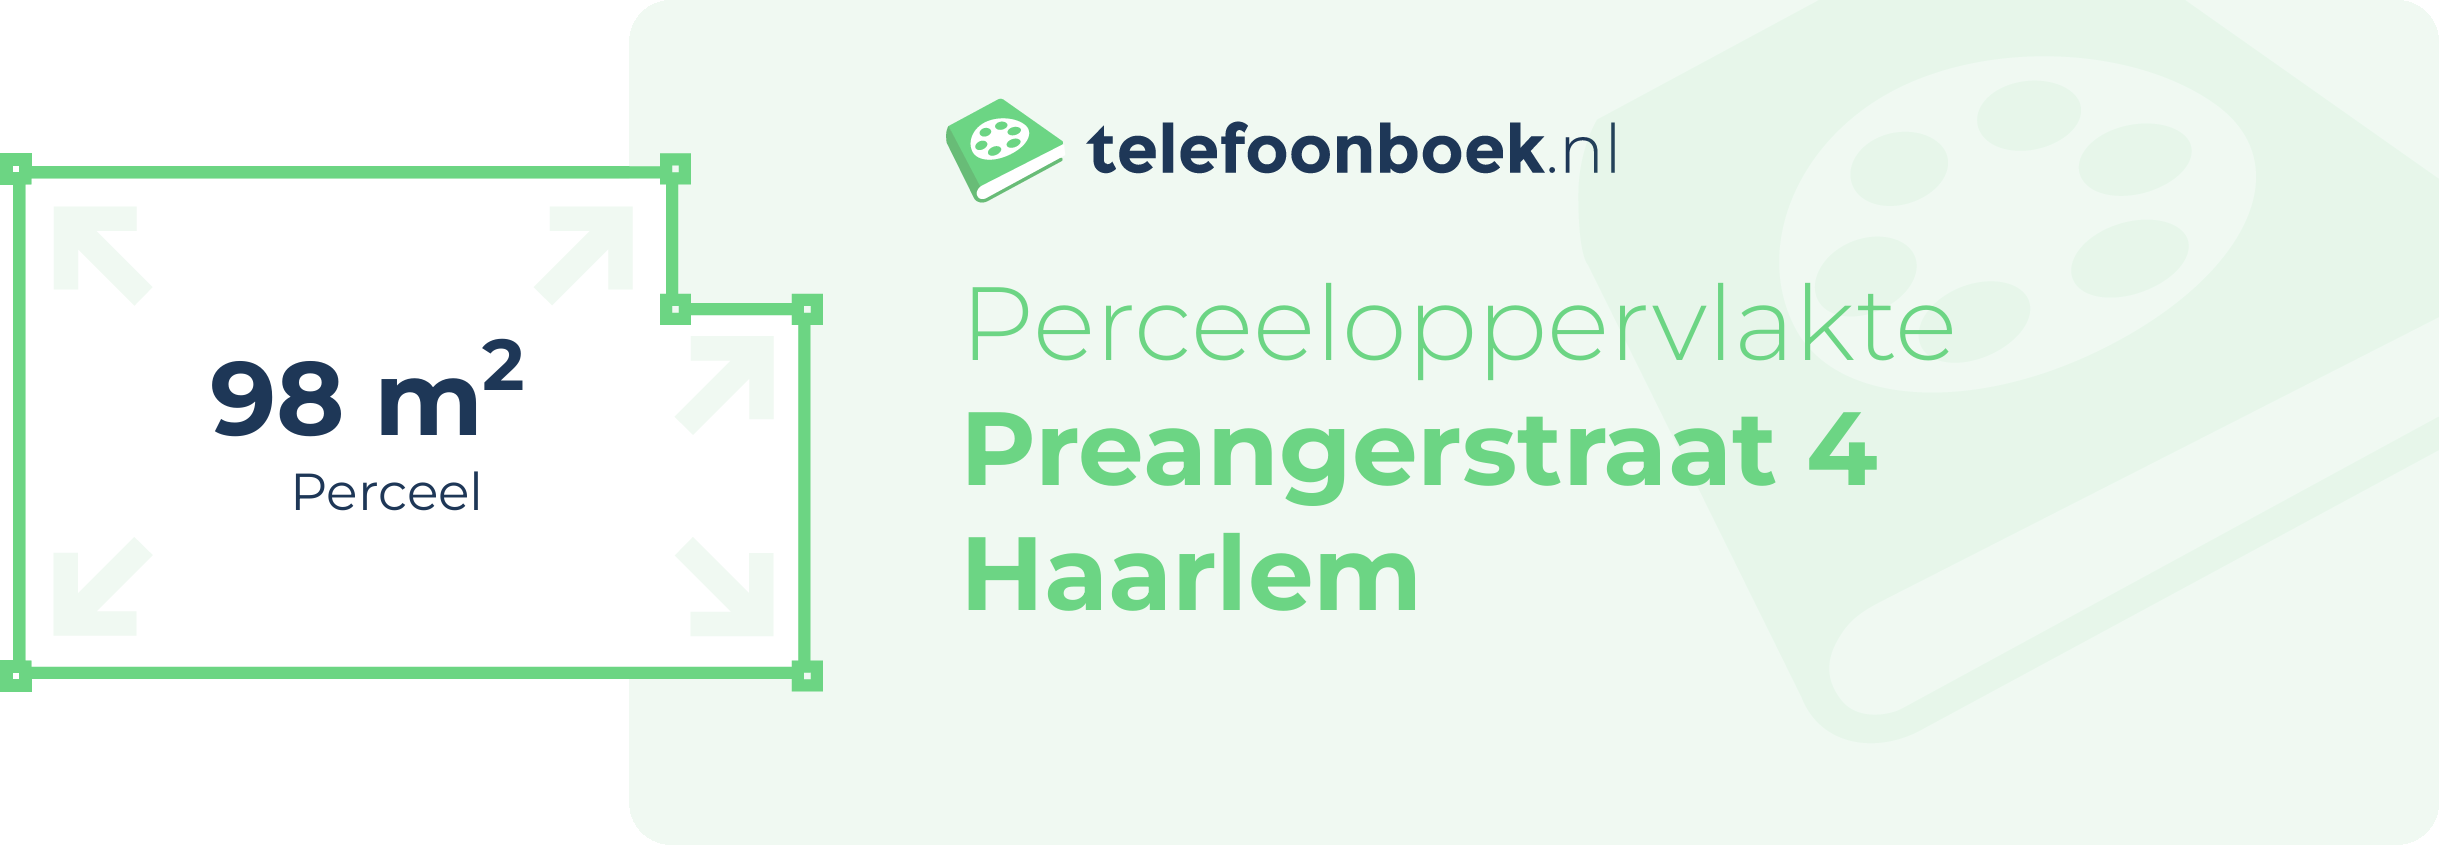 Perceeloppervlakte Preangerstraat 4 Haarlem